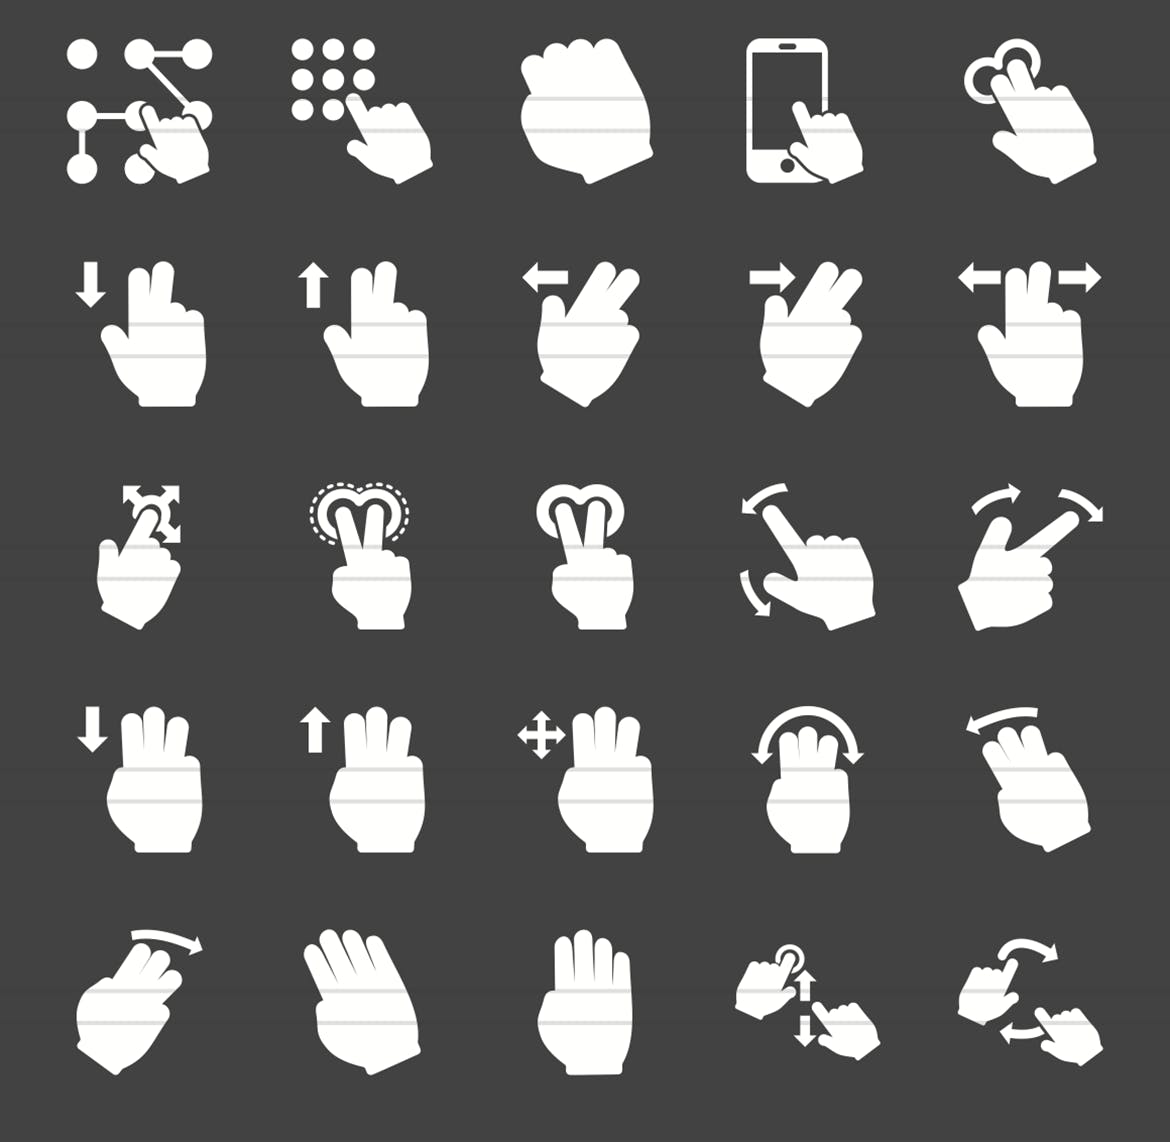 50枚触屏手势动作图标素材 50 Touch Gestures Glyph Inverted Icons插图(2)